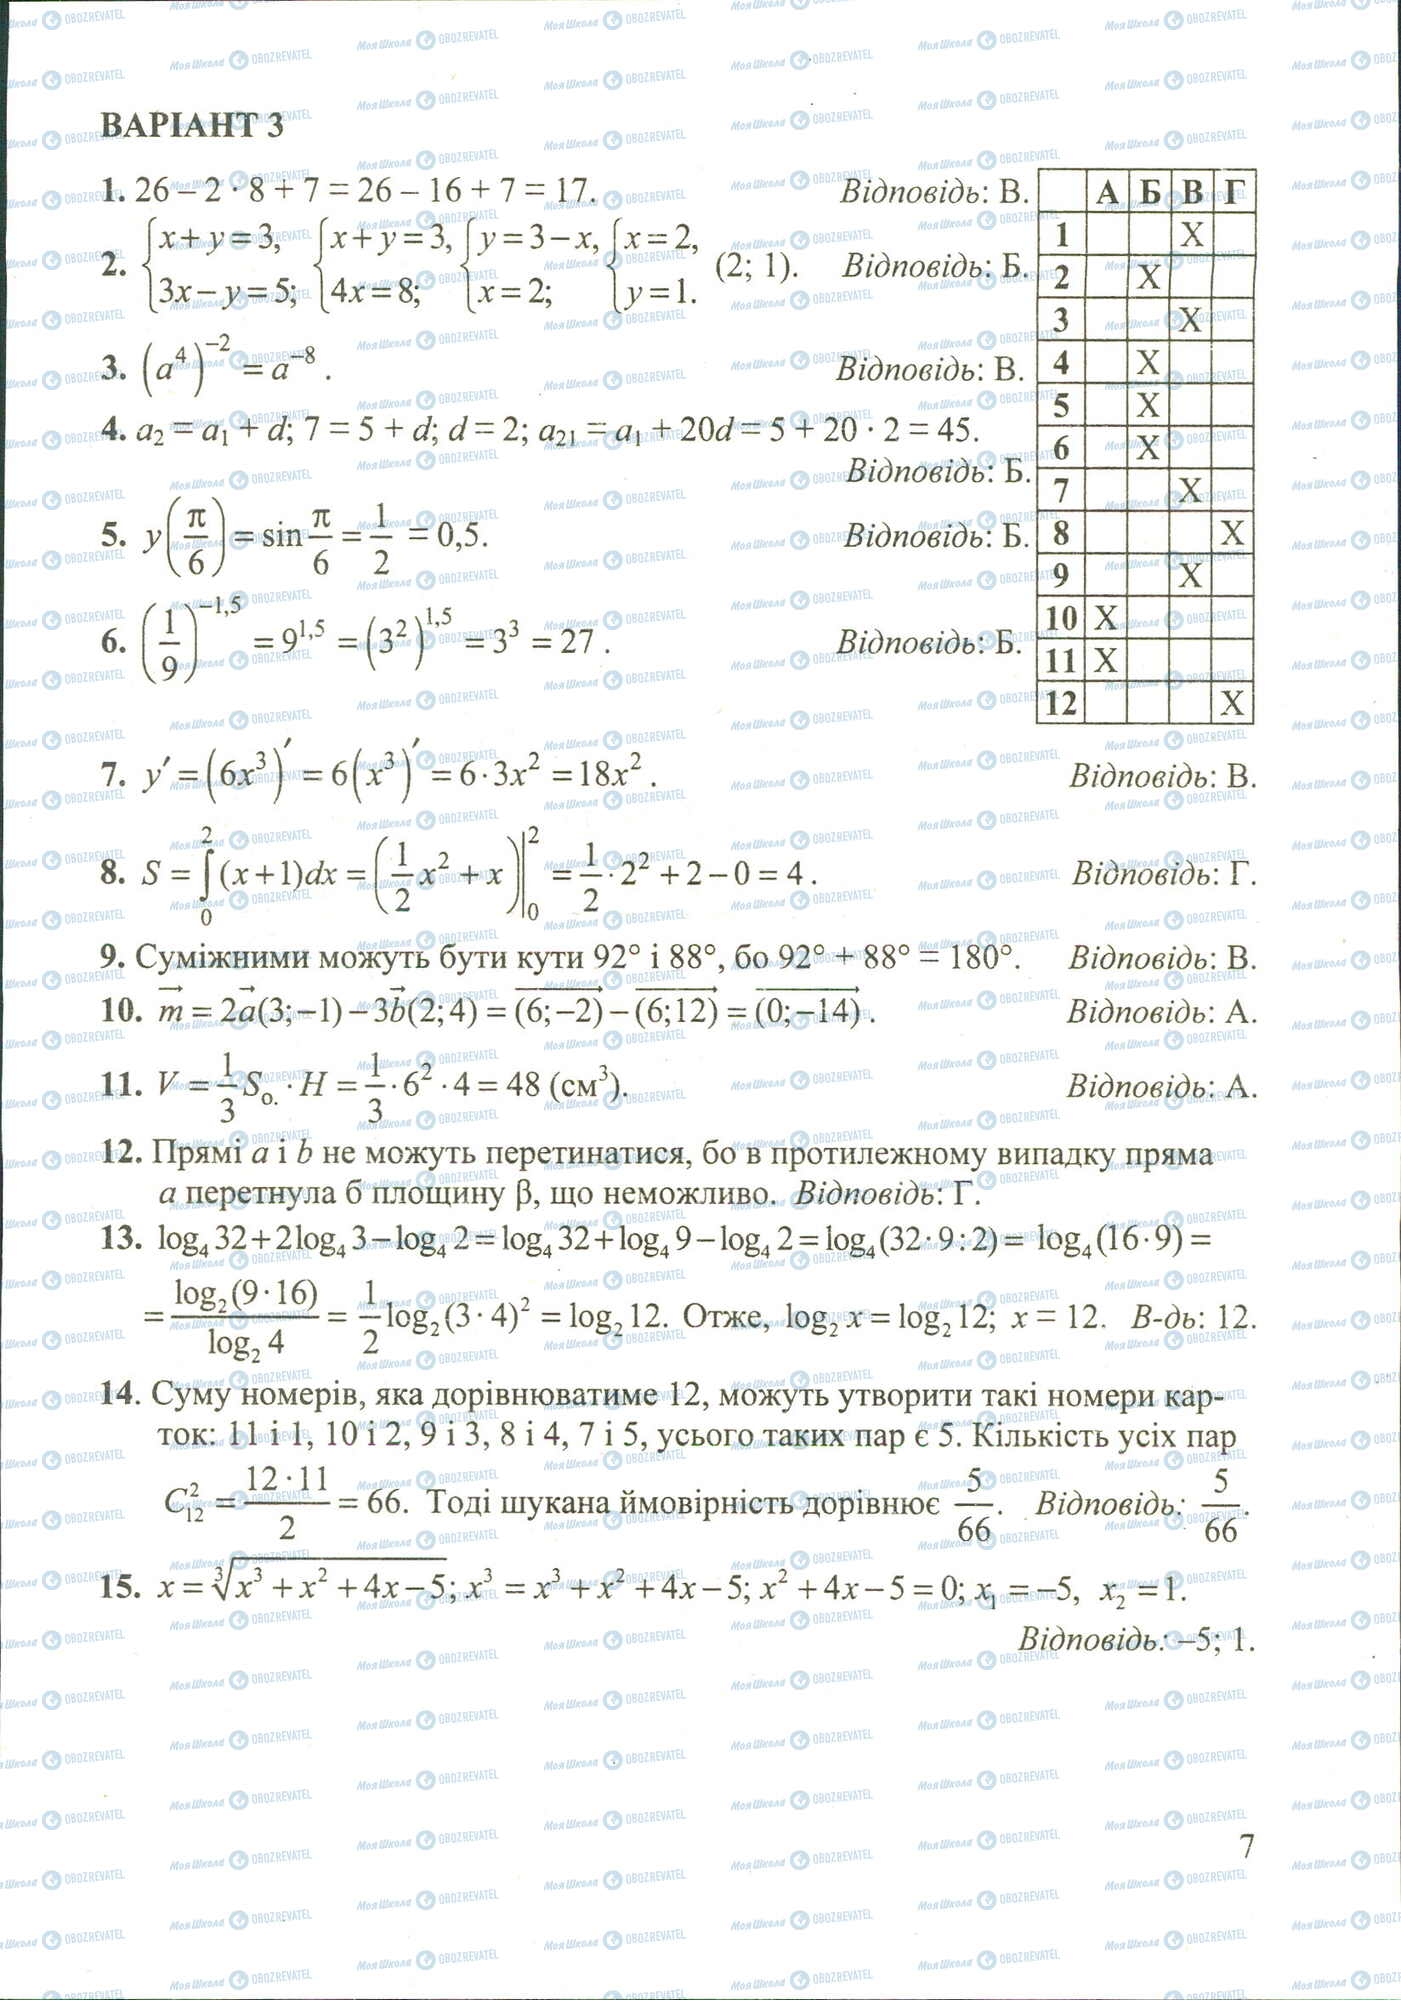 ДПА Математика 11 класс страница image0000003A